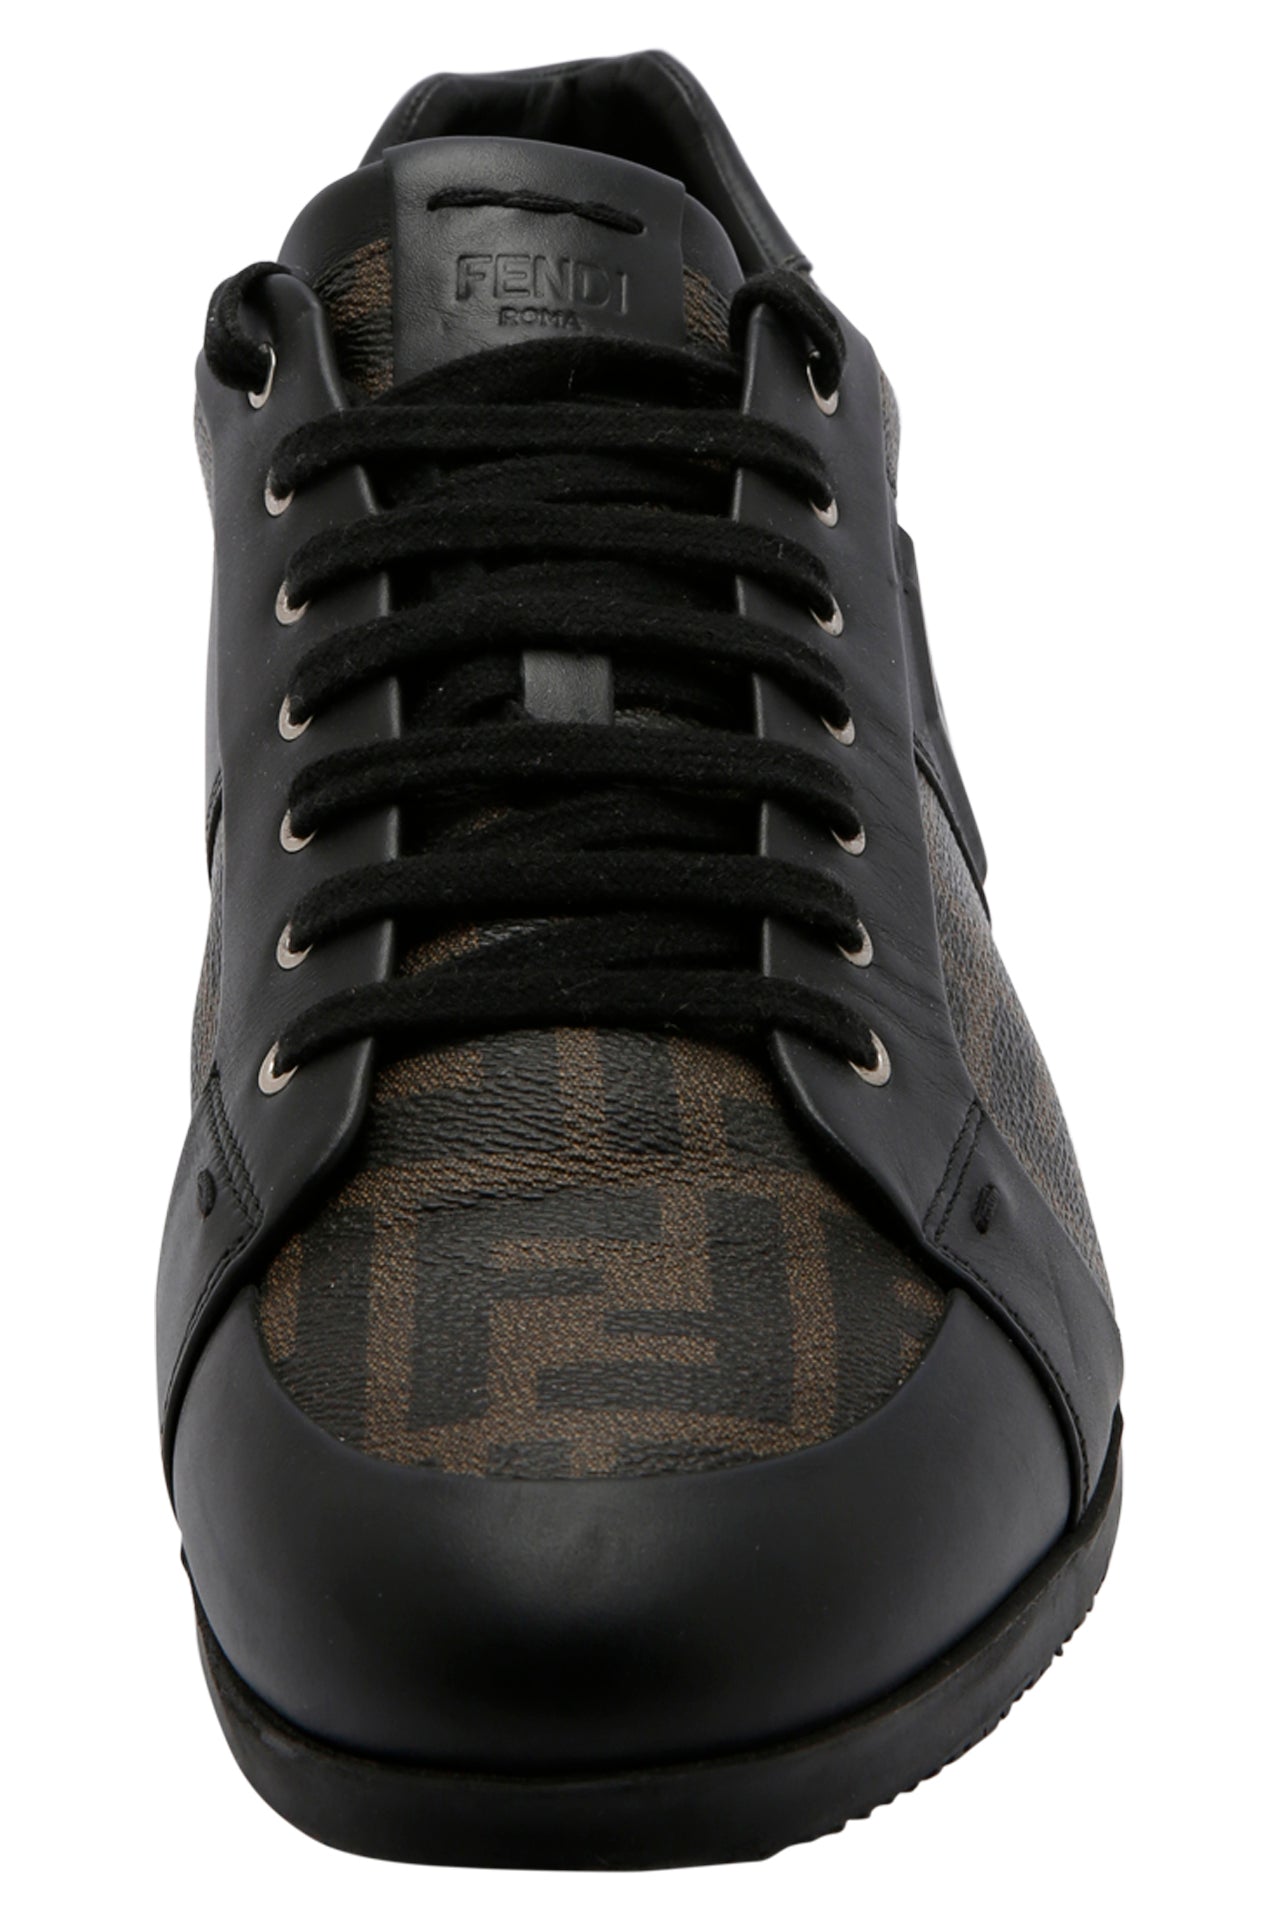 Fendi Zucca Logo Sneakers Size EU 46